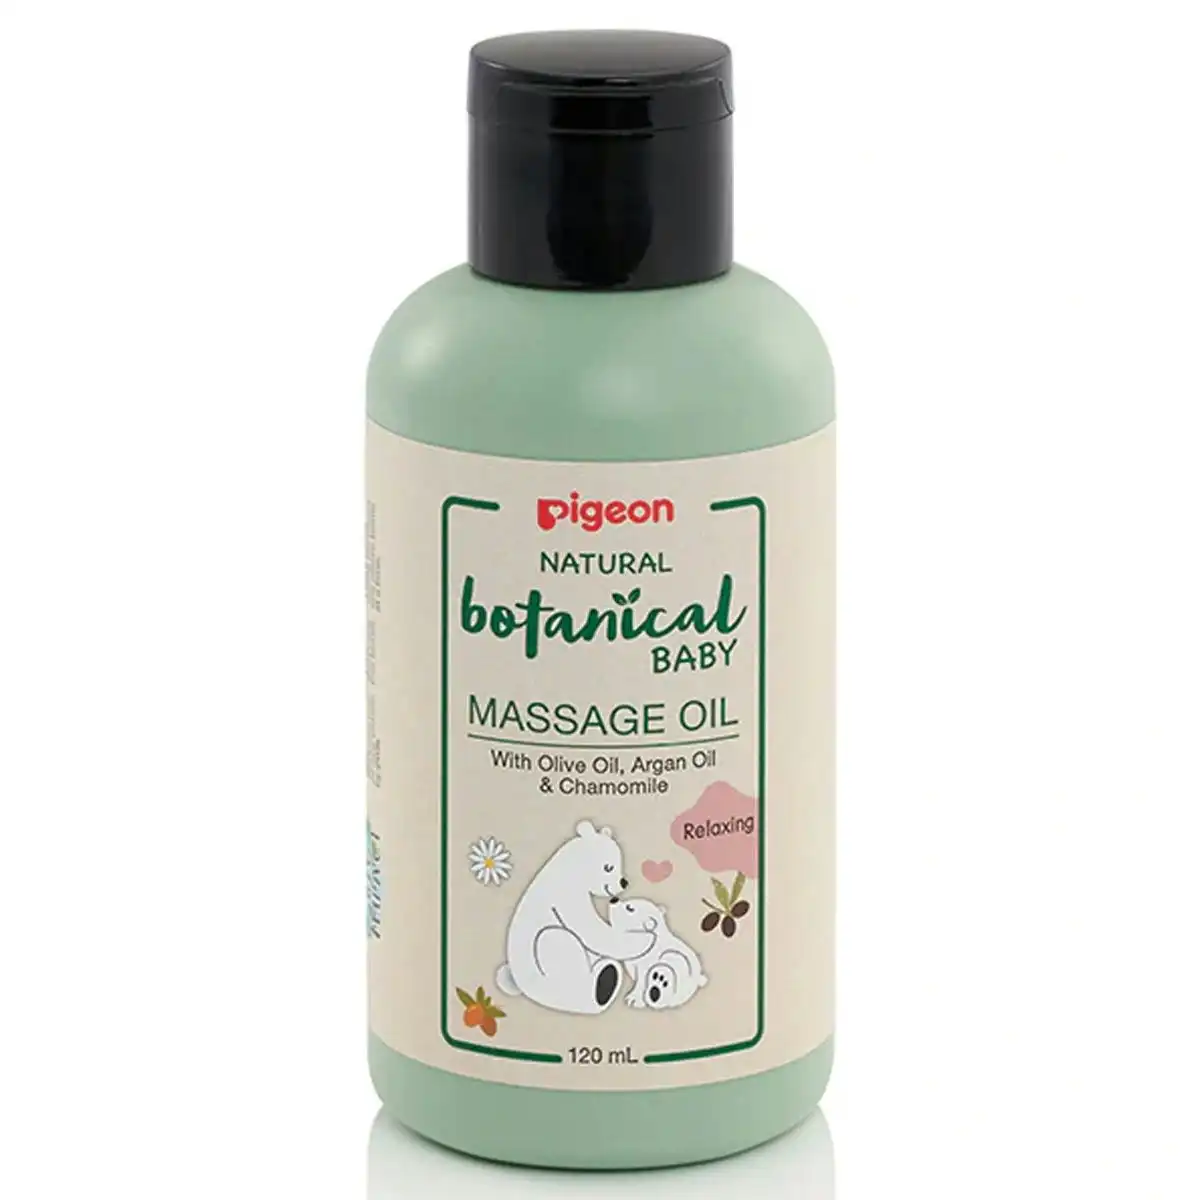 PIGEON Natural Botanical Baby Massage Oil 120ml